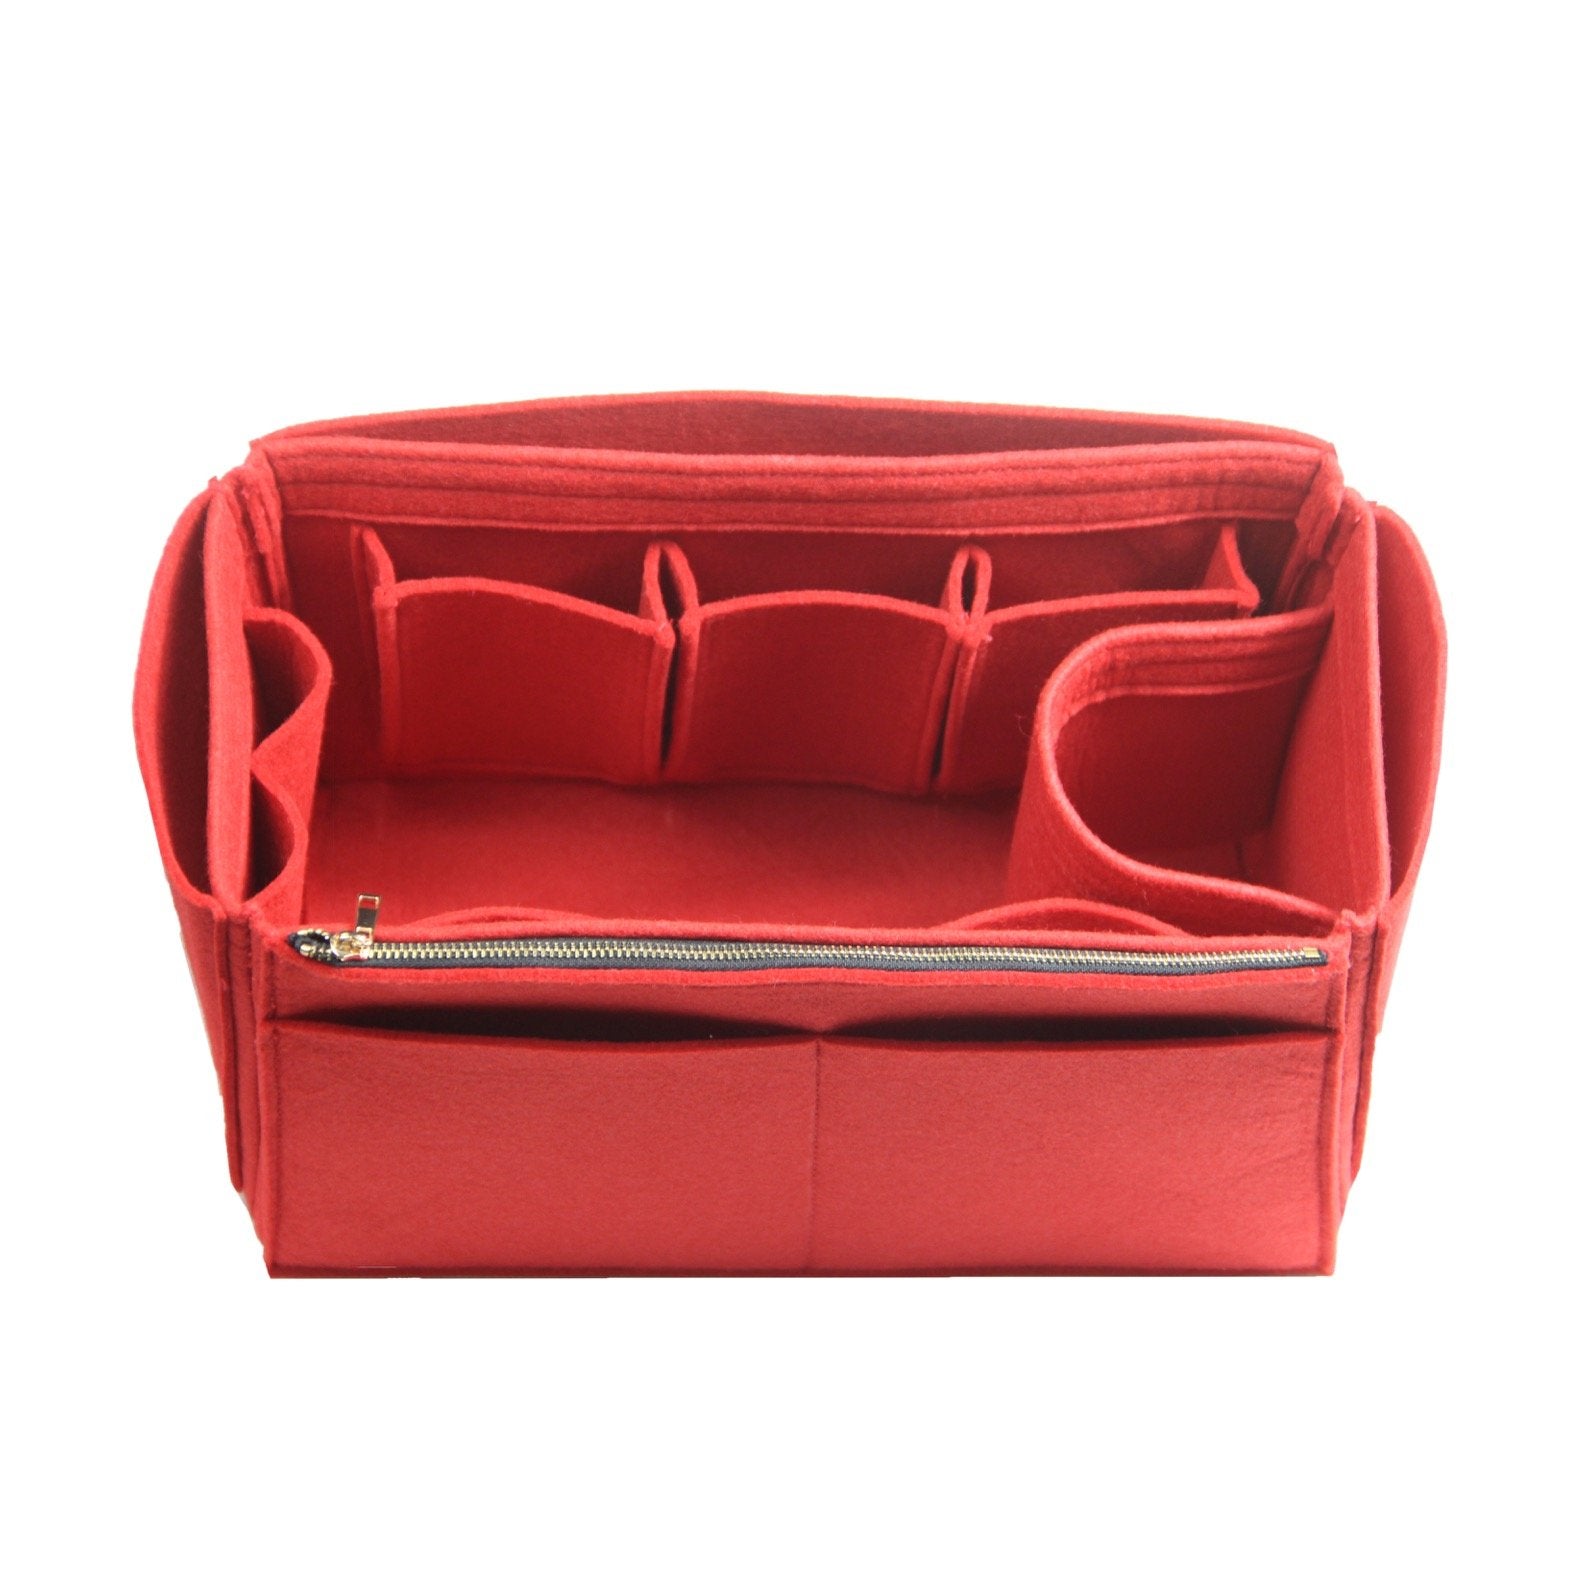 Premium Handbag liner for Saint Laurent Shopping Tote – Enni's